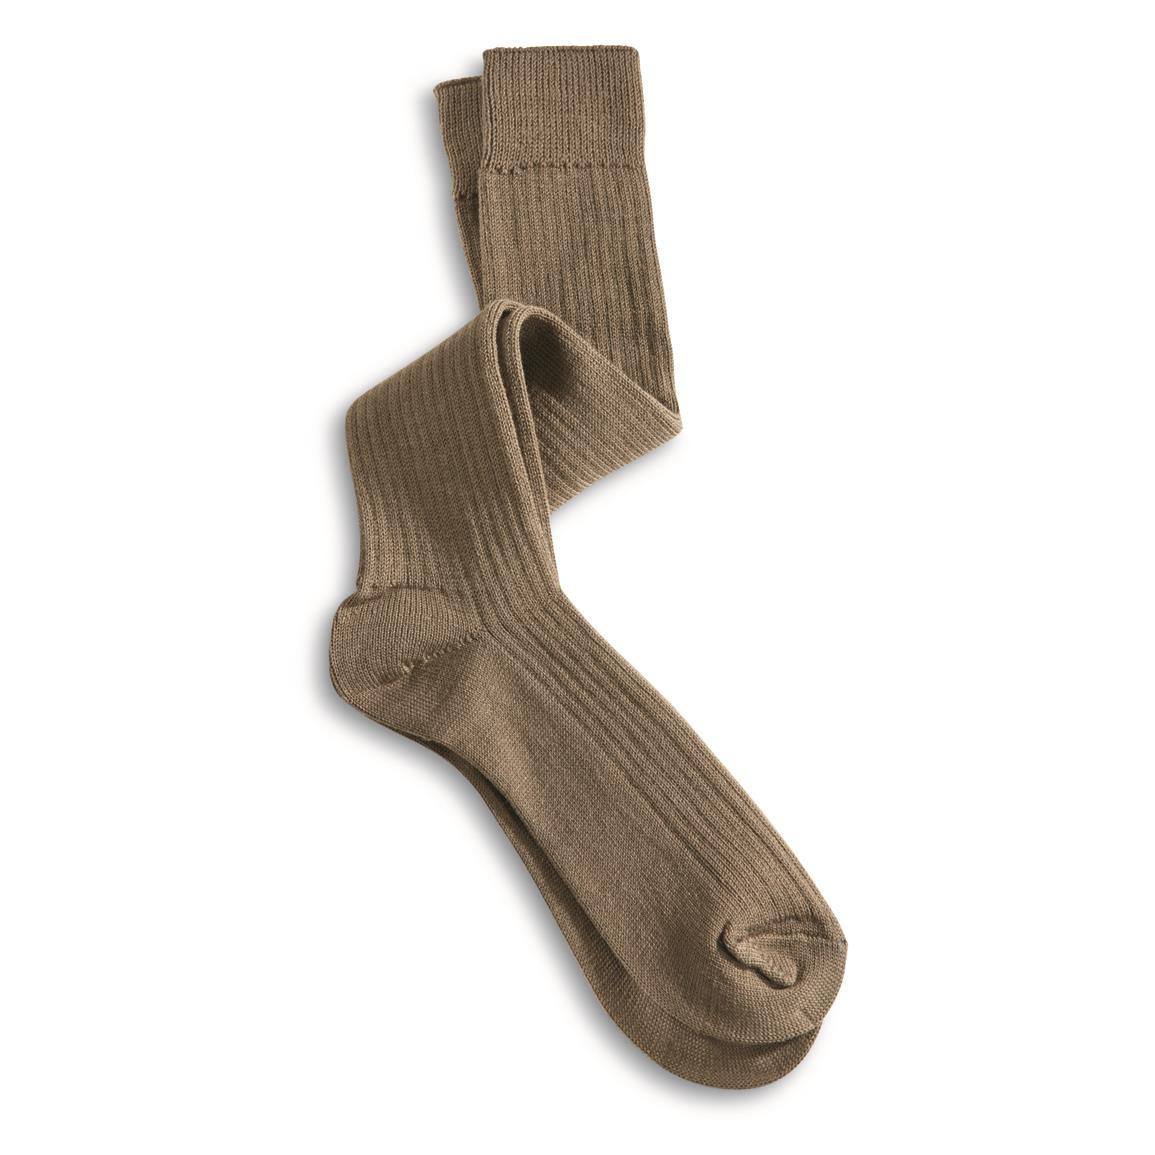 Italian Military Surplus Wool Blend Alpine Boot Socks, 3 Pack, New, Olive Drab